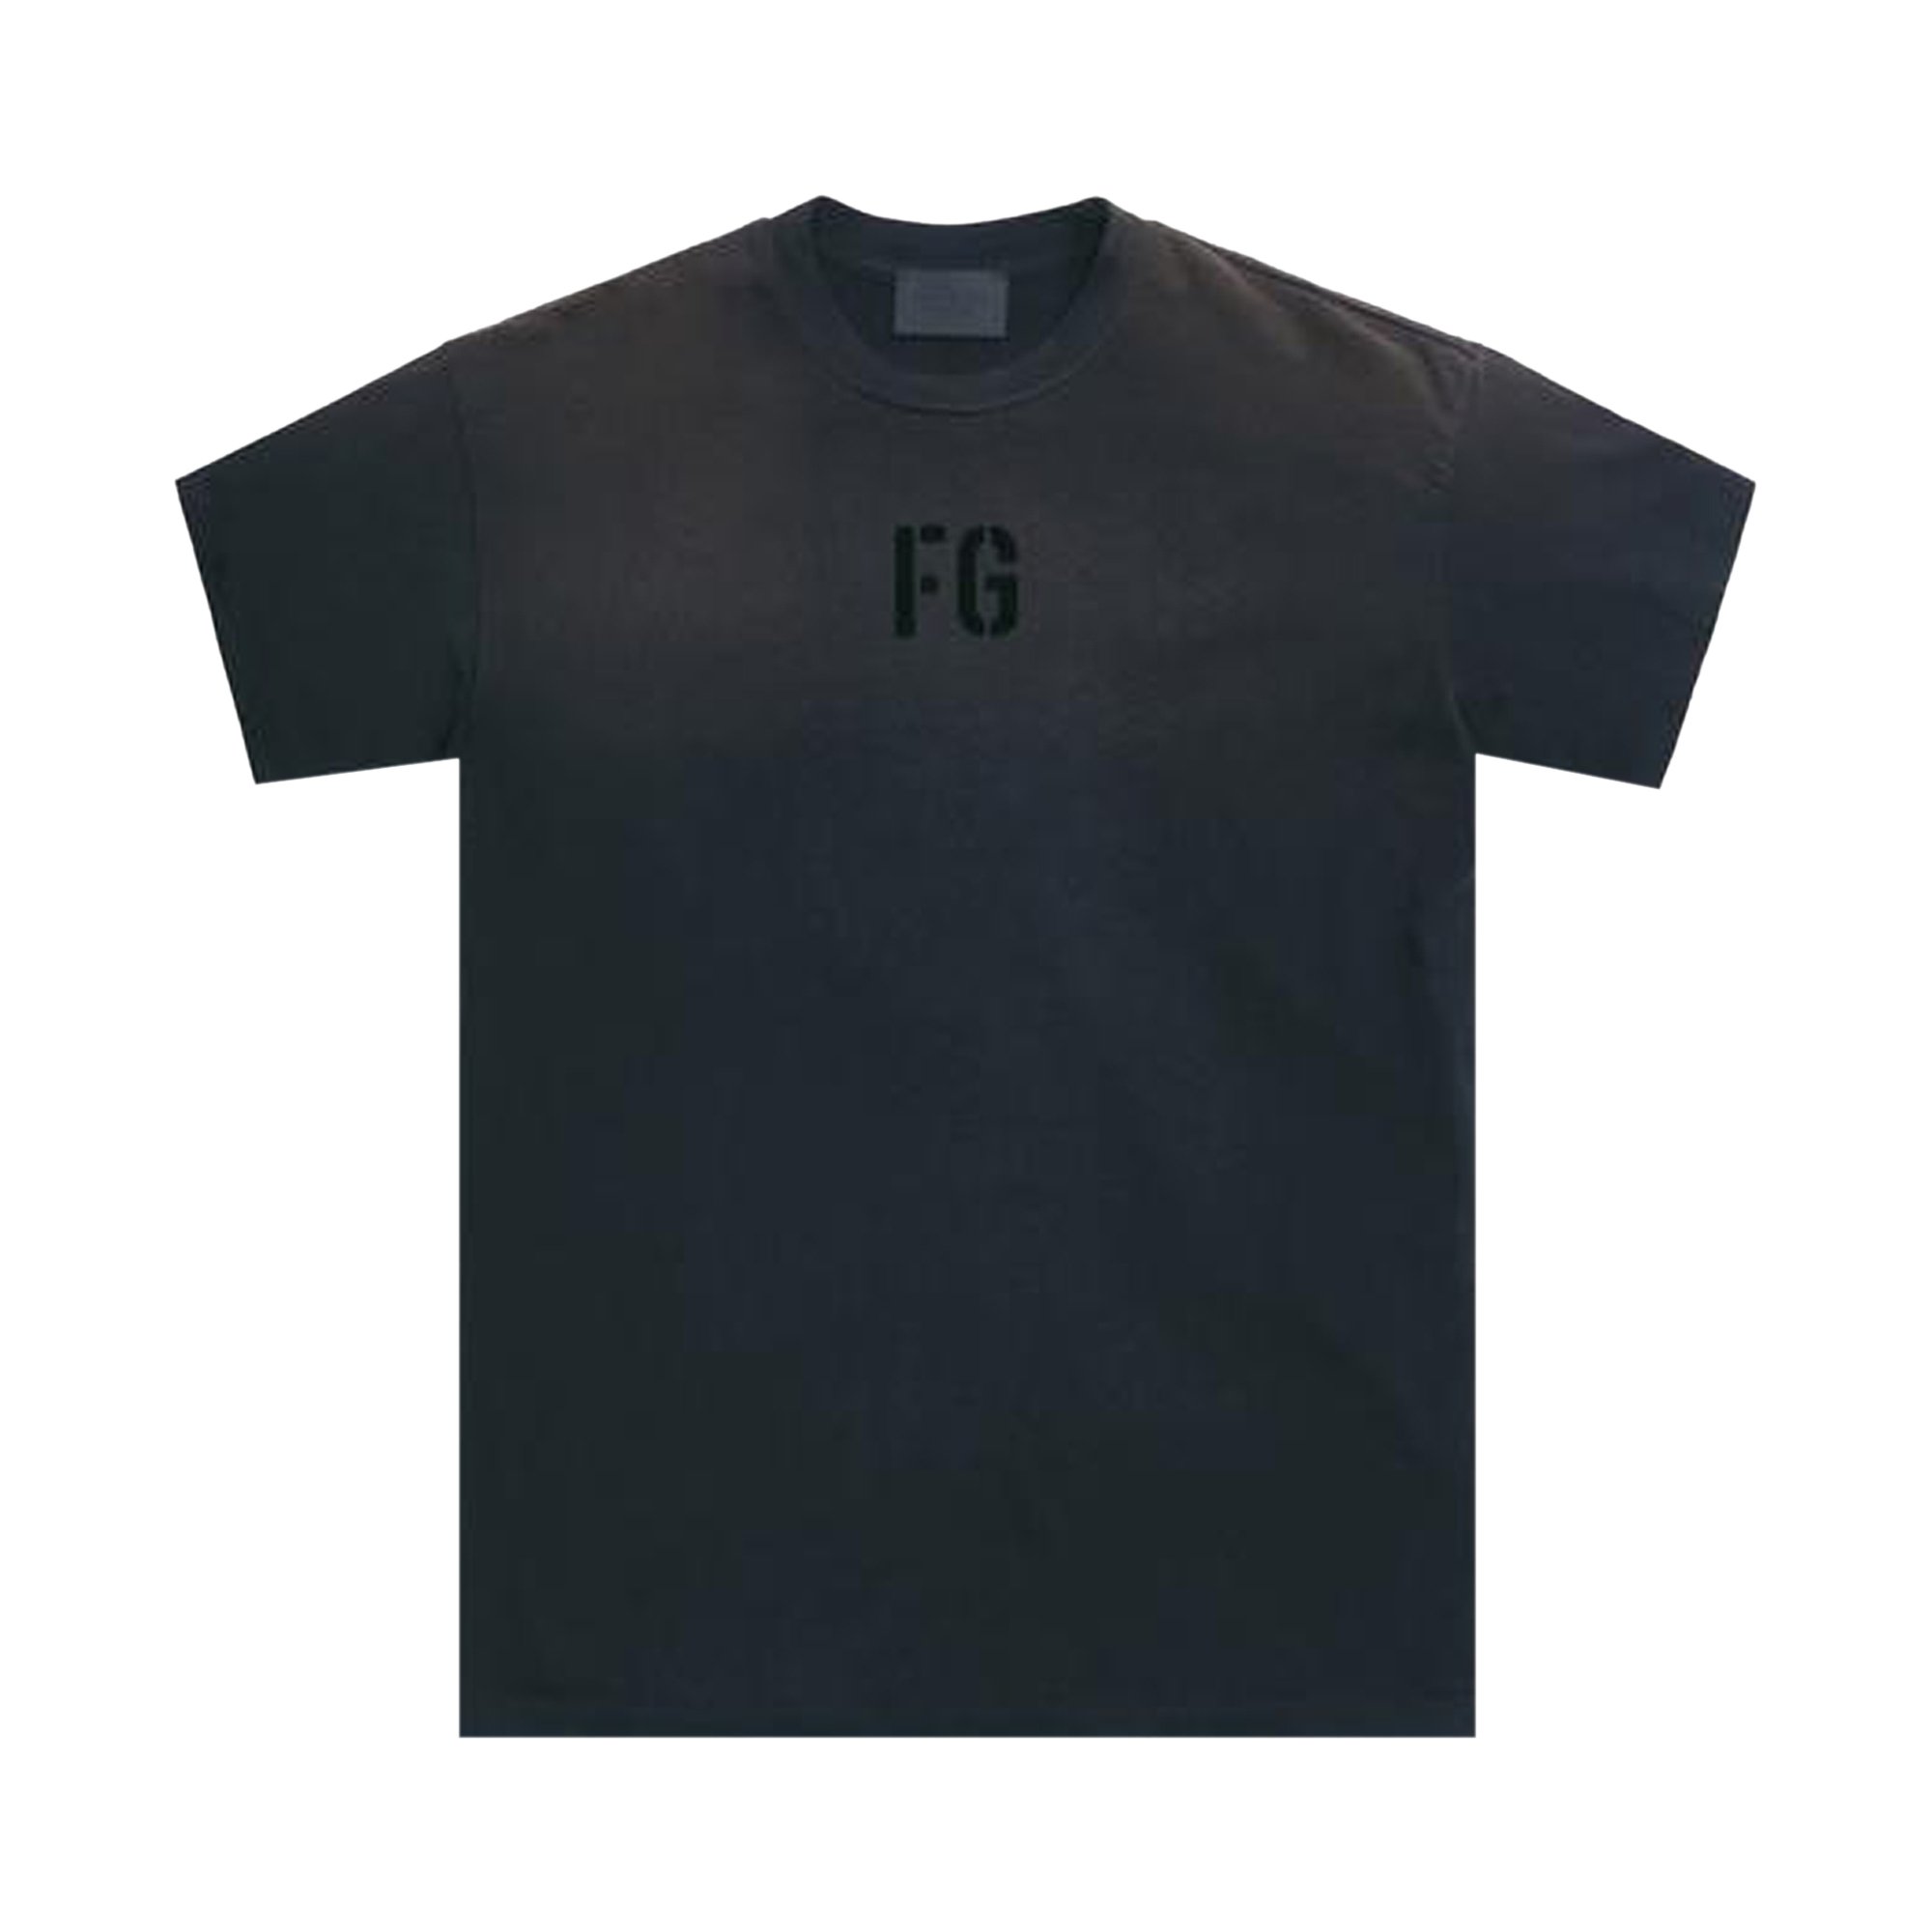 Buy Fear of God FG Tee 'Vintage Black' - FG50 025CTJ 010 | GOAT